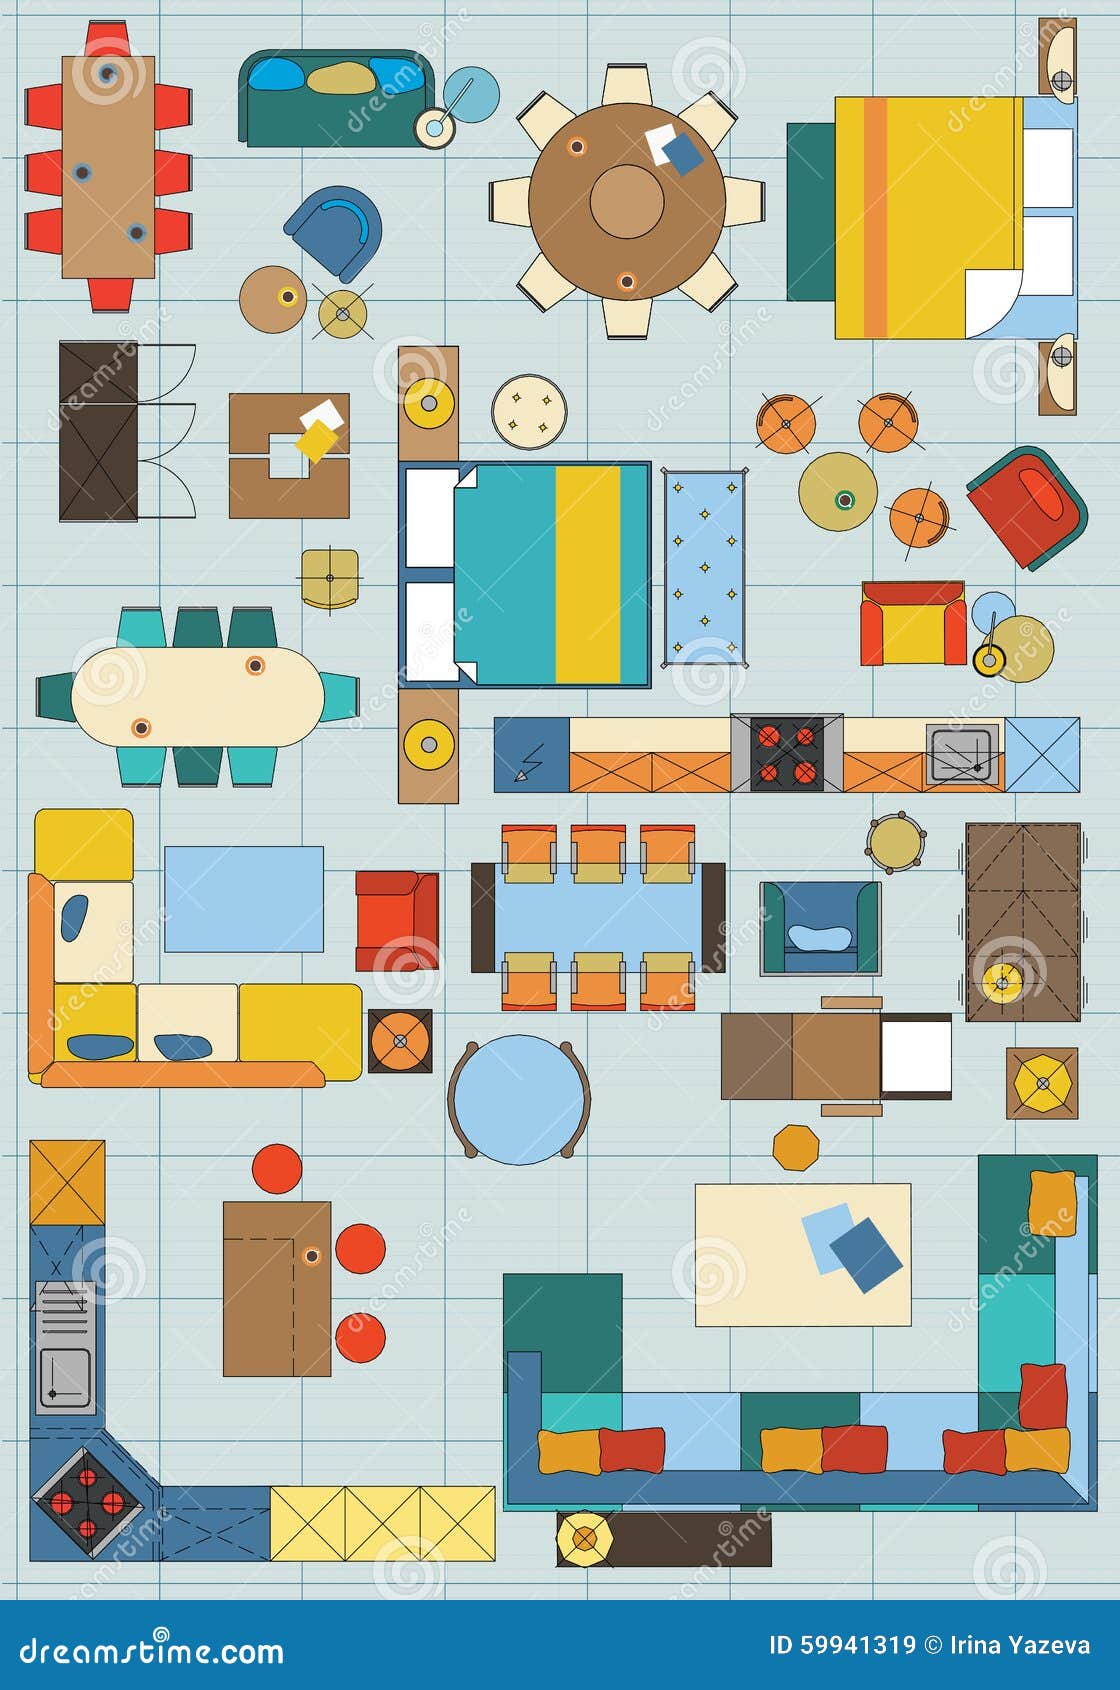 floor plan furniture clipart download - photo #48